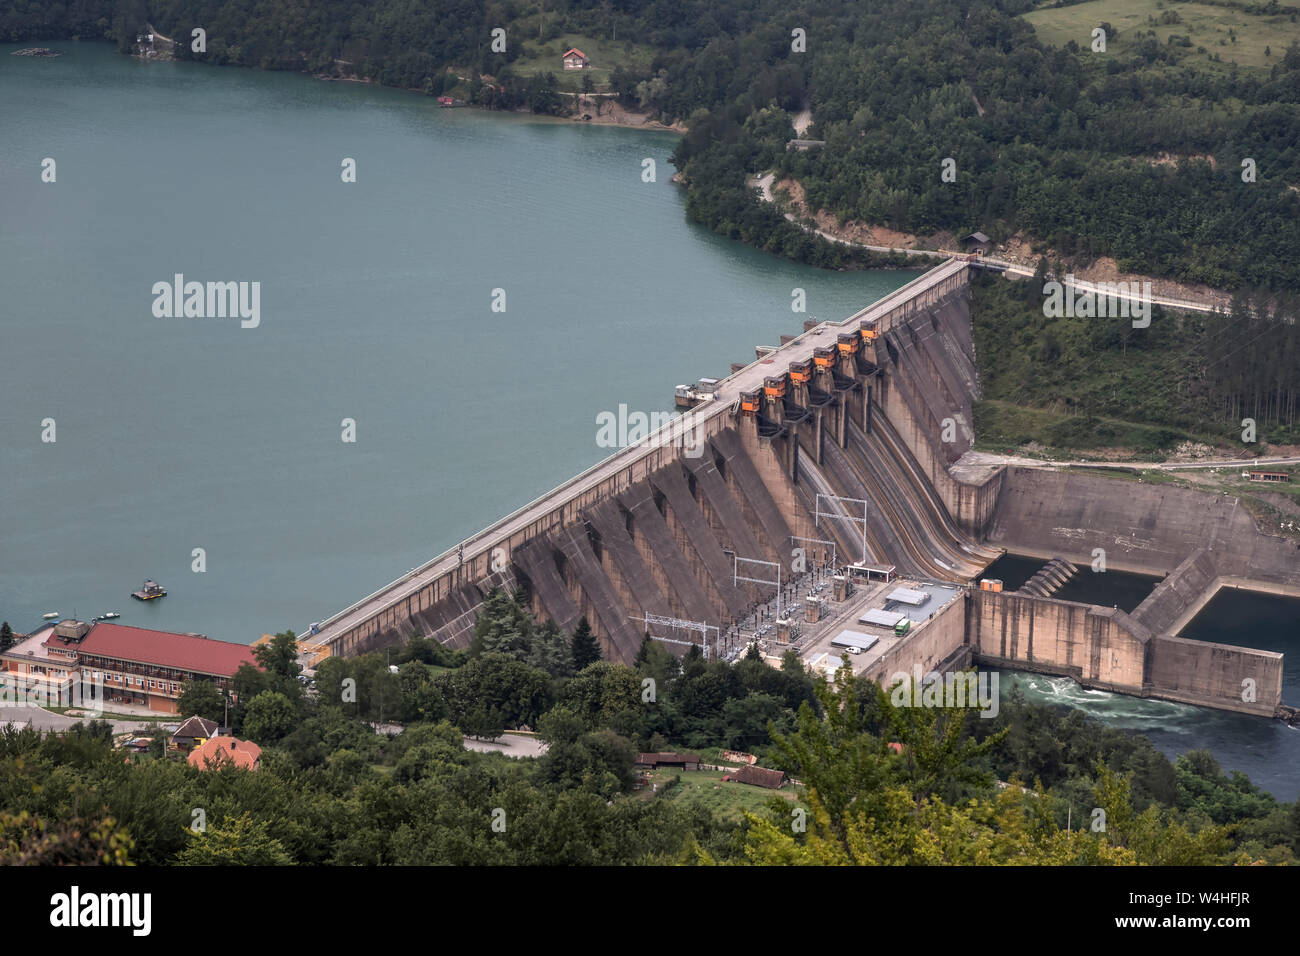 TARA National Park, Western Serbia - Aerial view of the Bajina Bašta  hydropower dam on the Lake Perućac and Drina River Stock Photo - Alamy